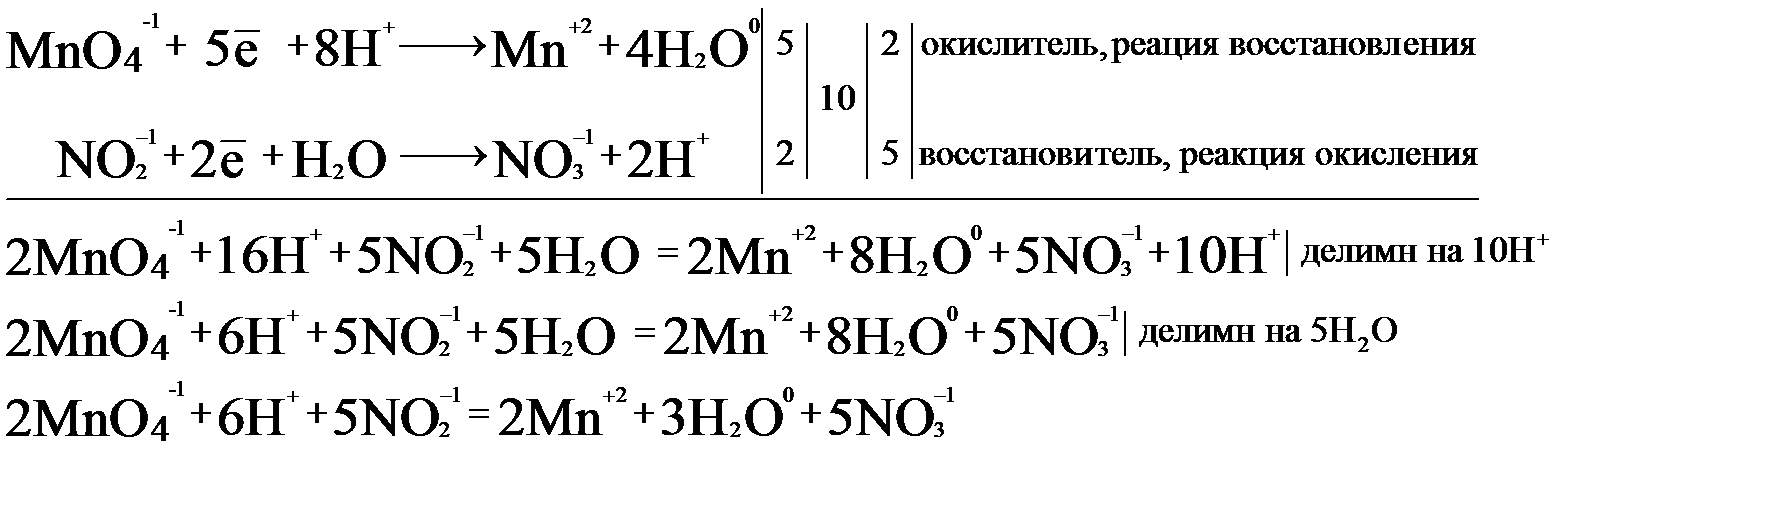 Zn h2so4 znso4 h2s s so2 h2o. Nano2 ОВР. Znso4 гидролиз. Электронно ионный метод ОВР. ОВР ZN+h2so4 znso4+h2s+h2o.